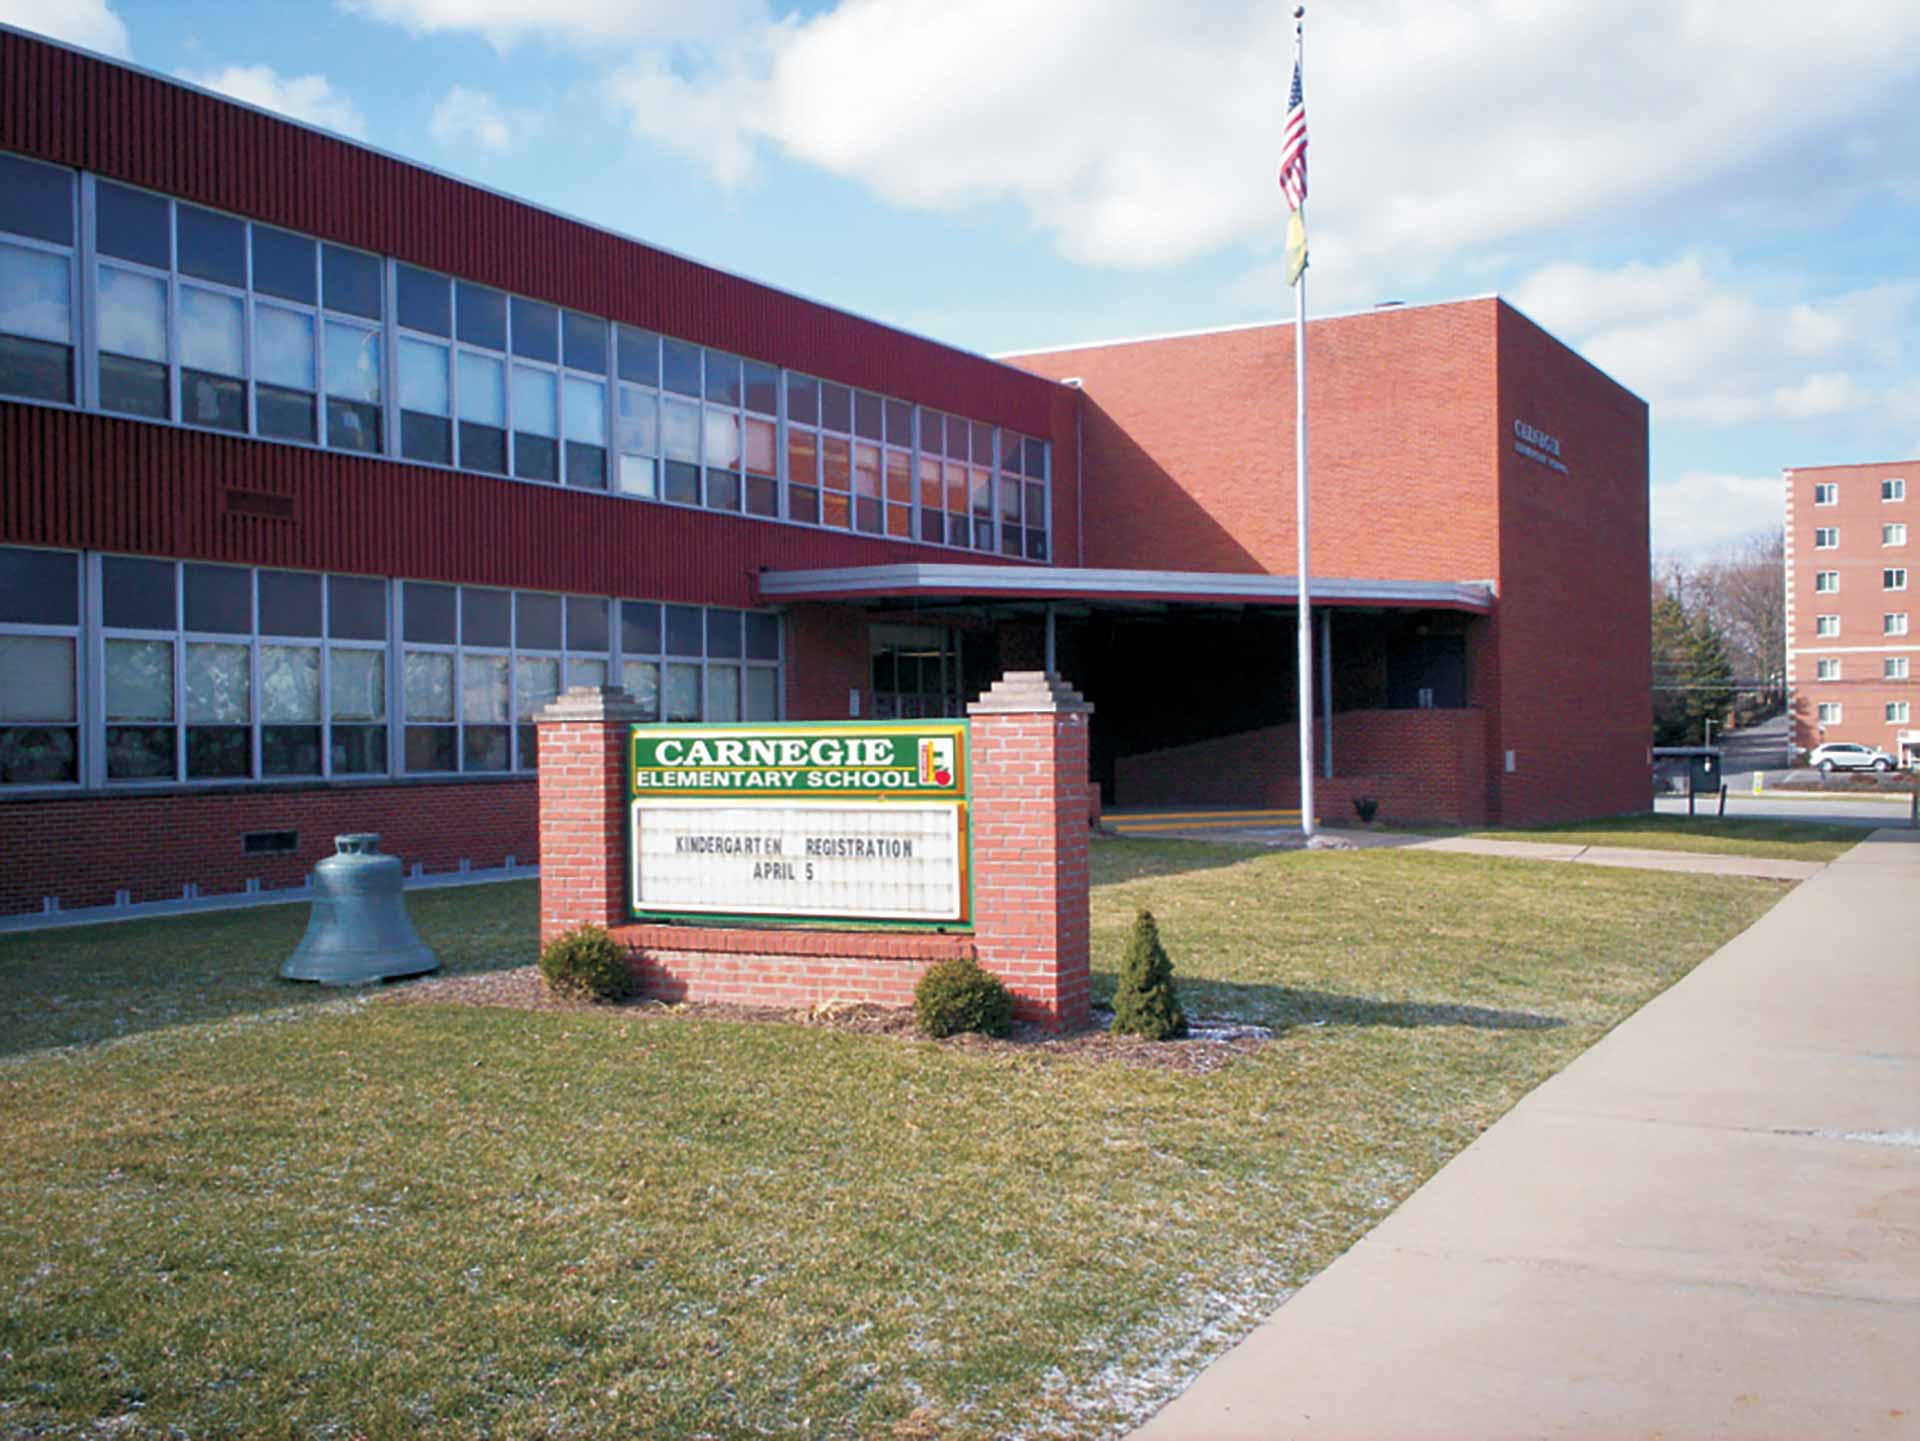 Carnegie Elementary